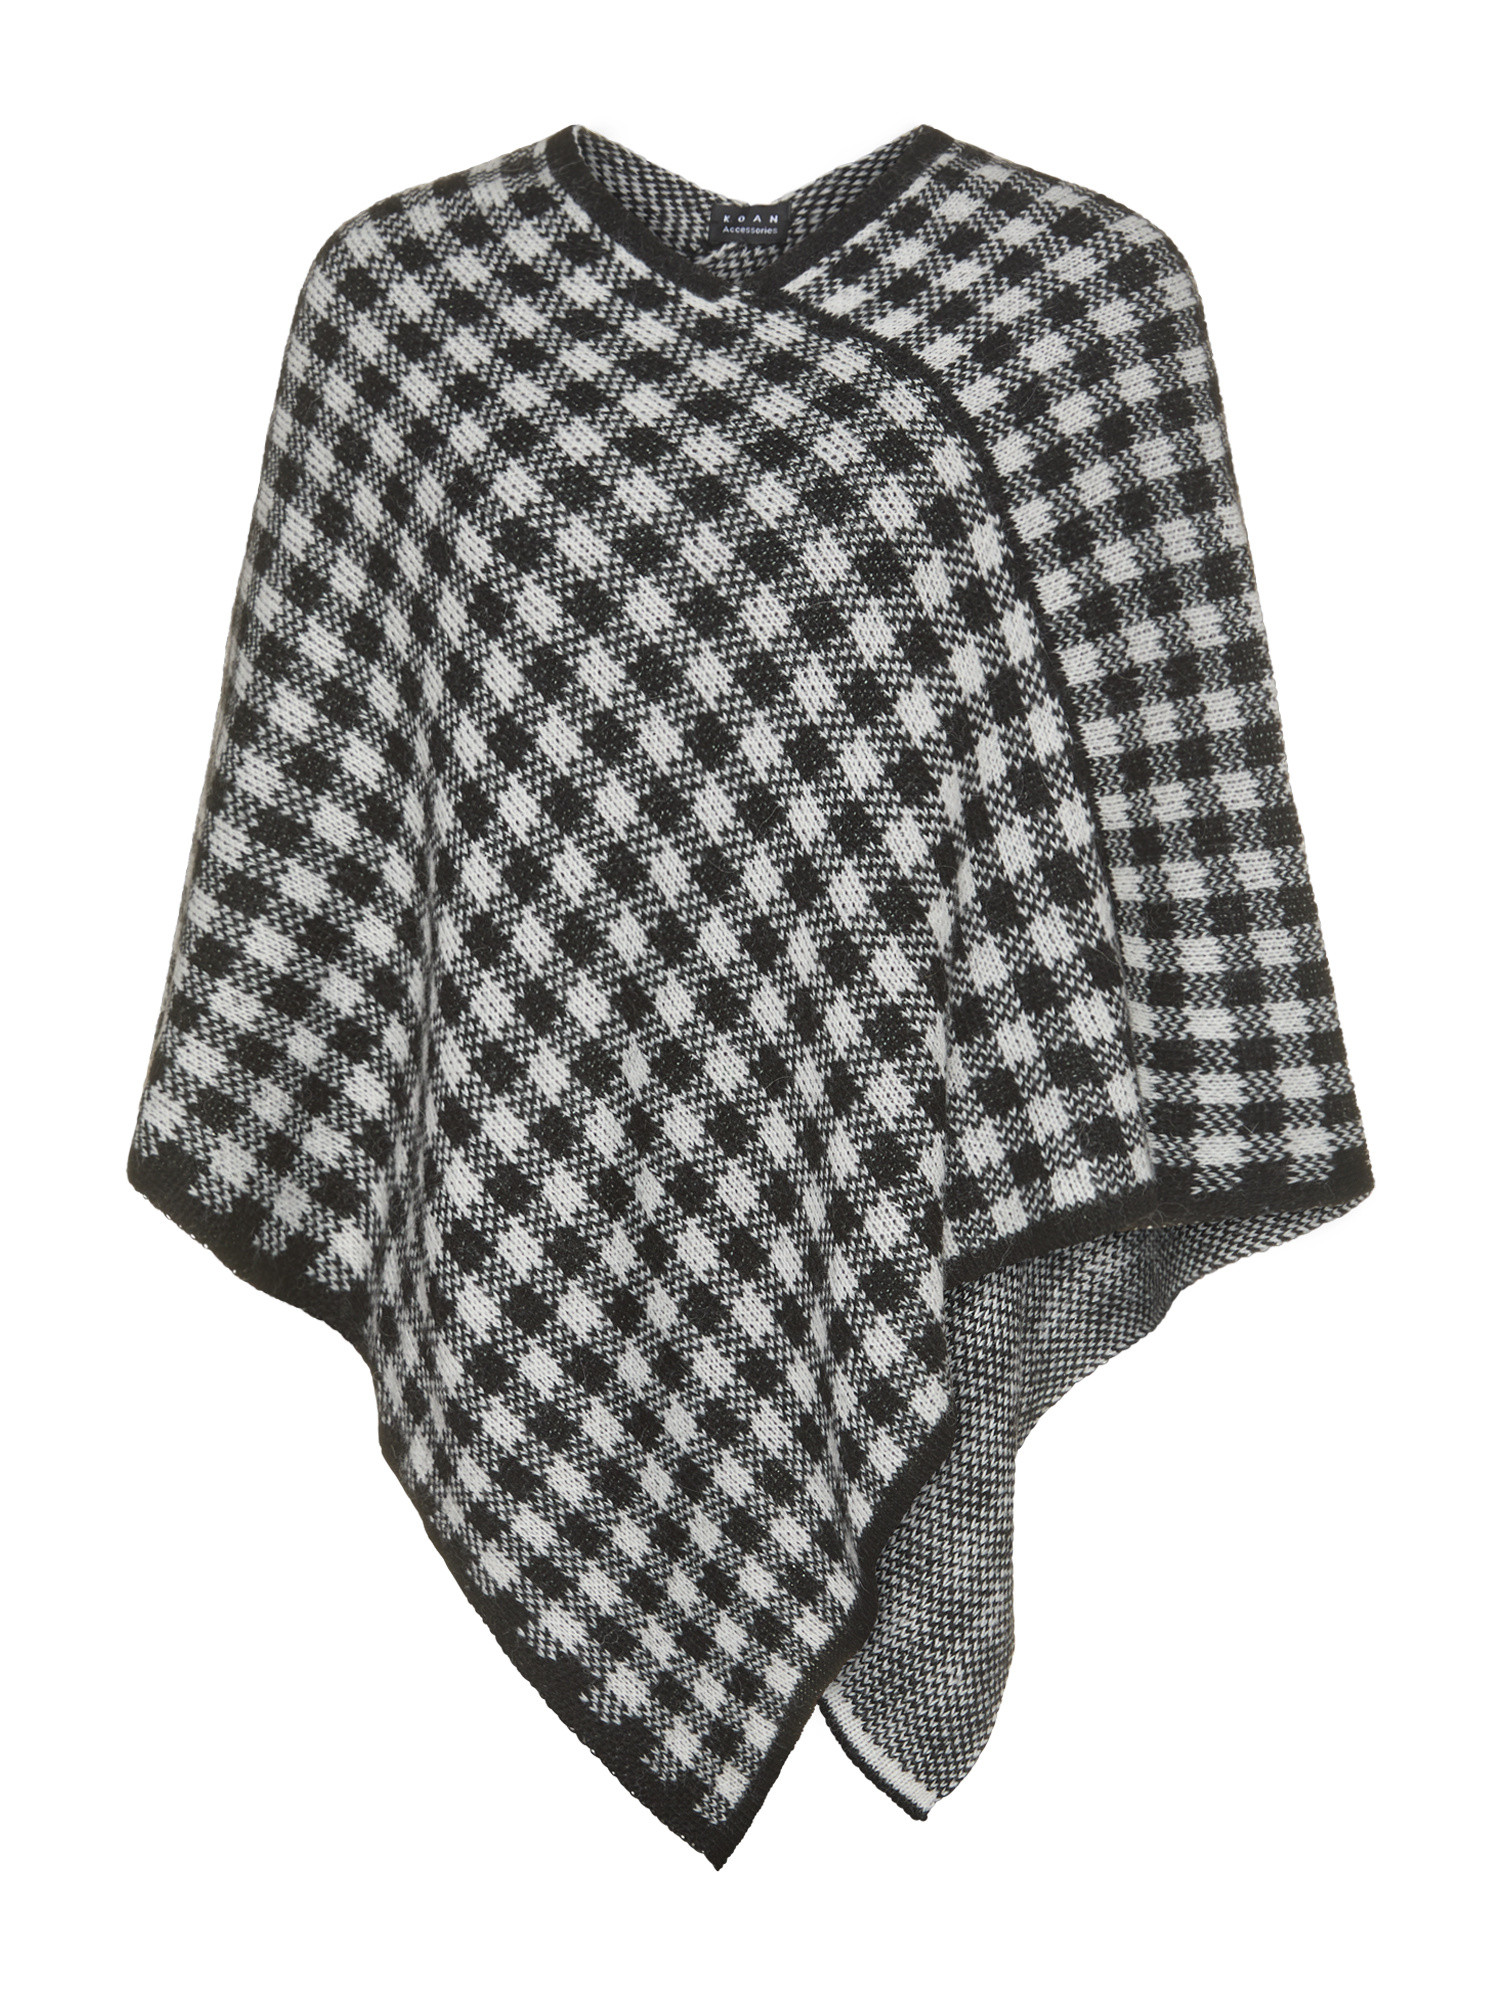 Koan - Checked jacquard knit poncho, White, large image number 0